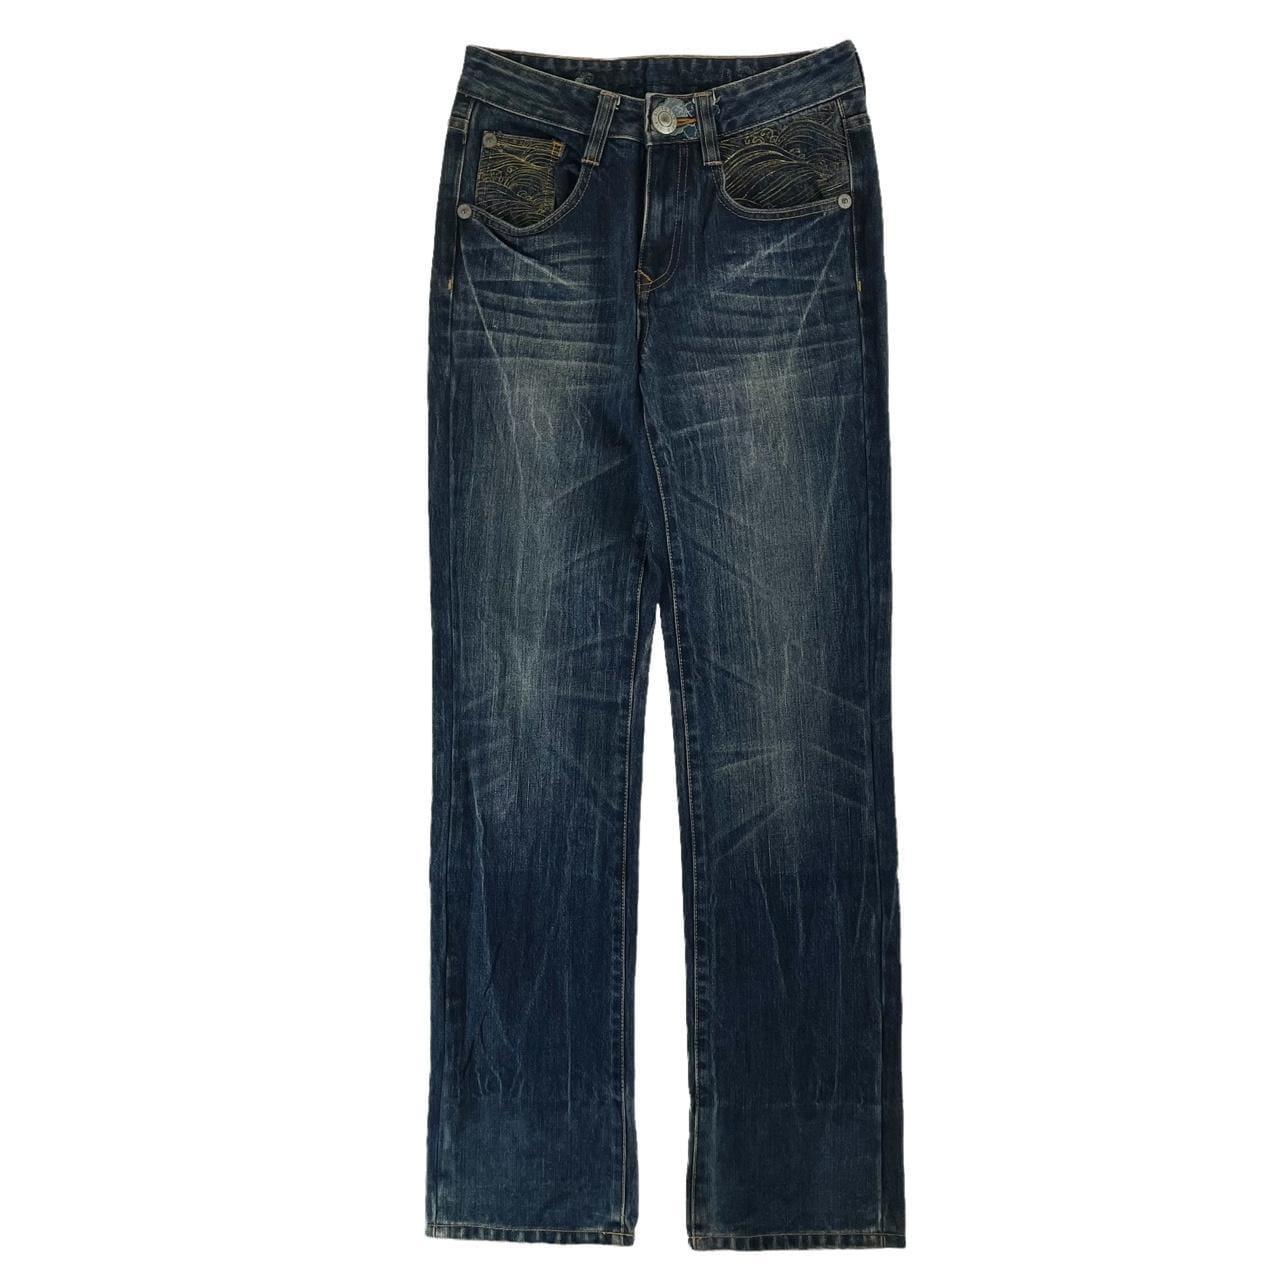 Vintage Big train waves Japanese denim jeans trousers W26 - Known Source